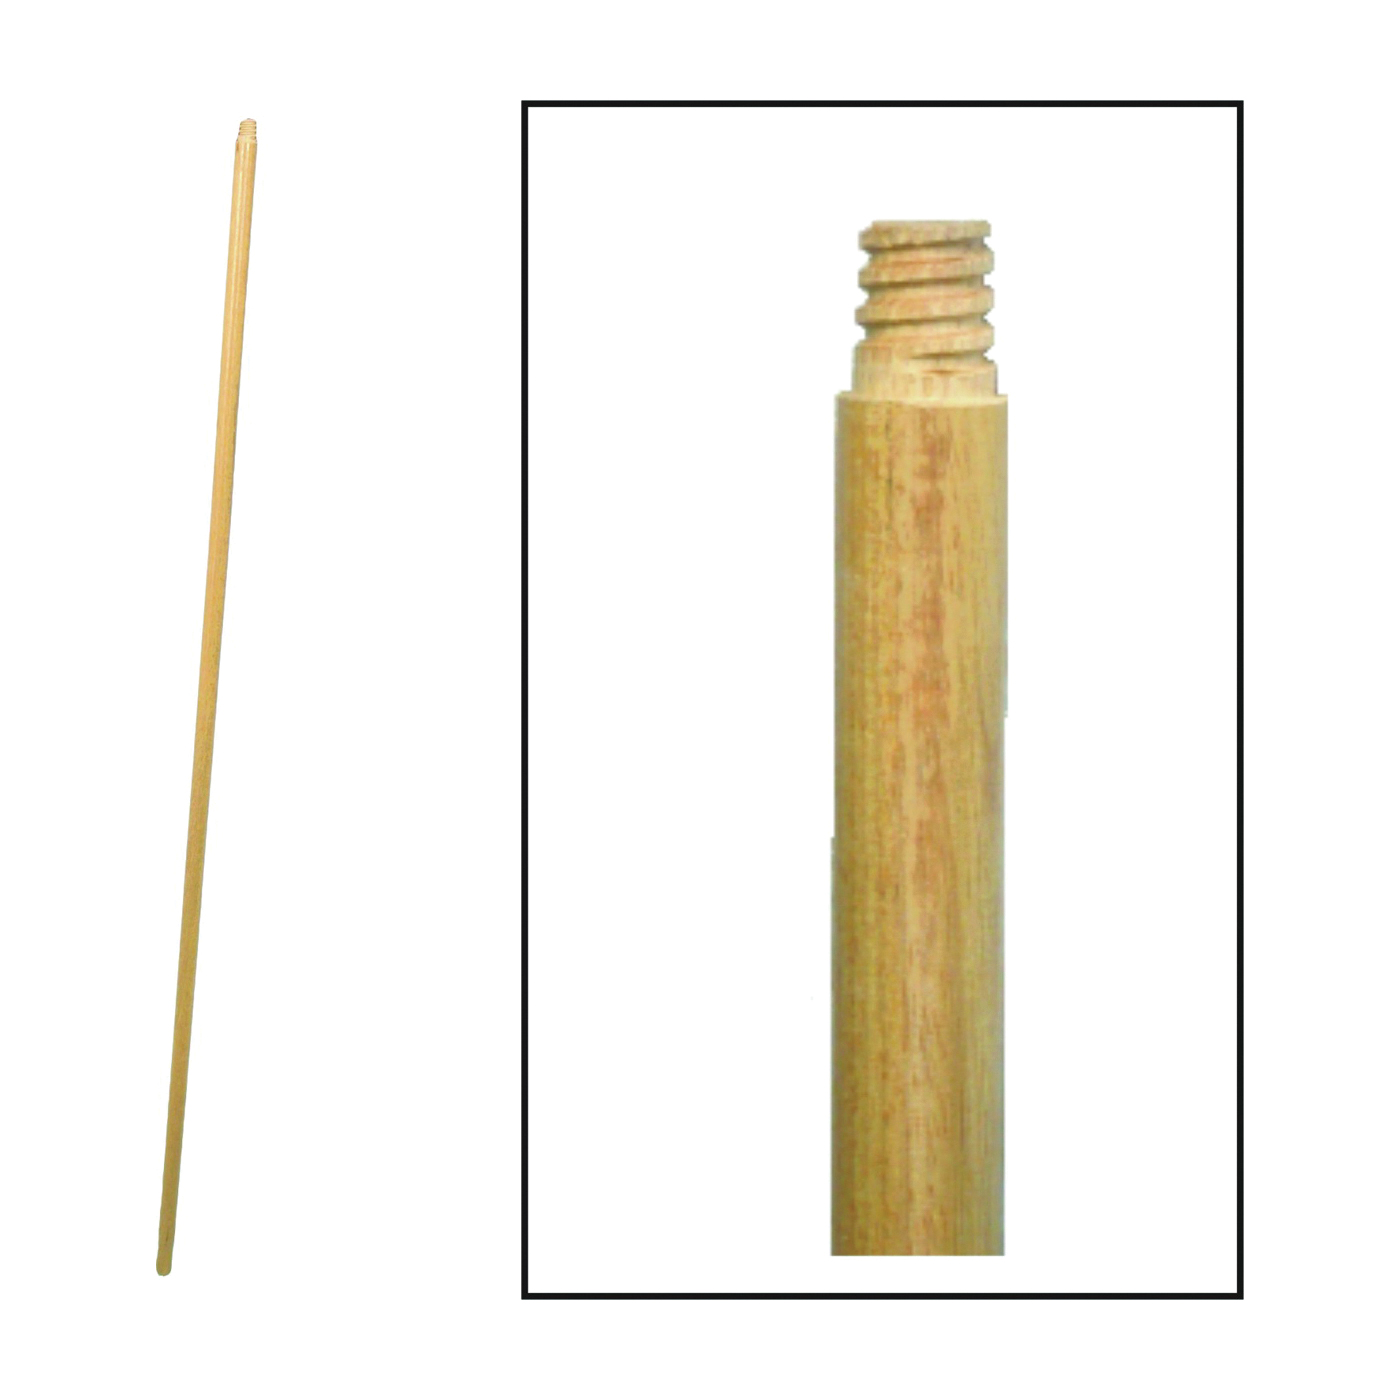 BIRDWELL 532-12 Broom Handle, 15/16 in Dia, 48 in L, Threaded, Hardwood - 1